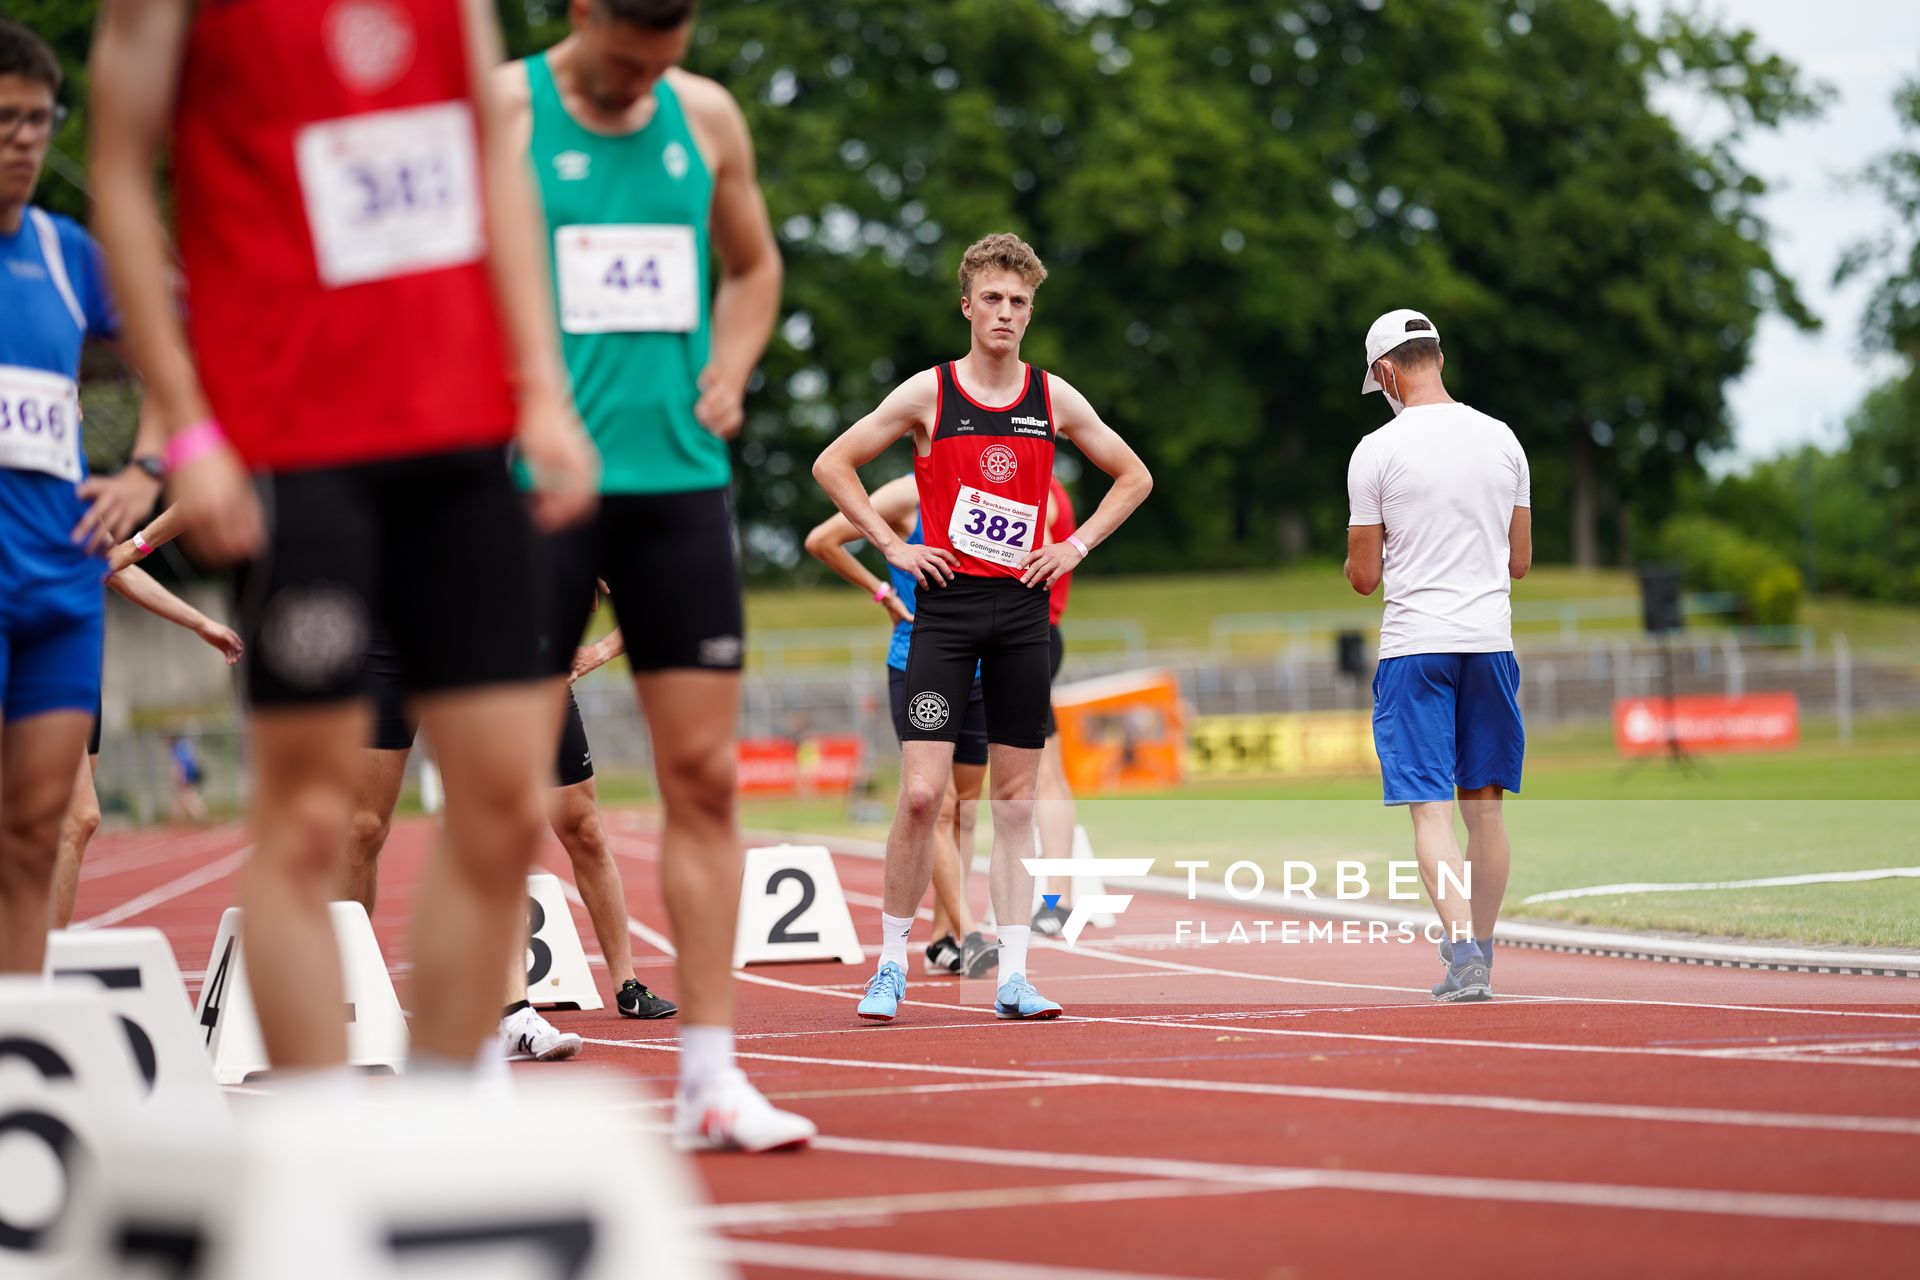 André Rohling (LG Osnabrueck) ueber 800m am 20.06.2021 waehrend den NLV + BLV Landesmeisterschaften im Jahnstadion in Göttingen